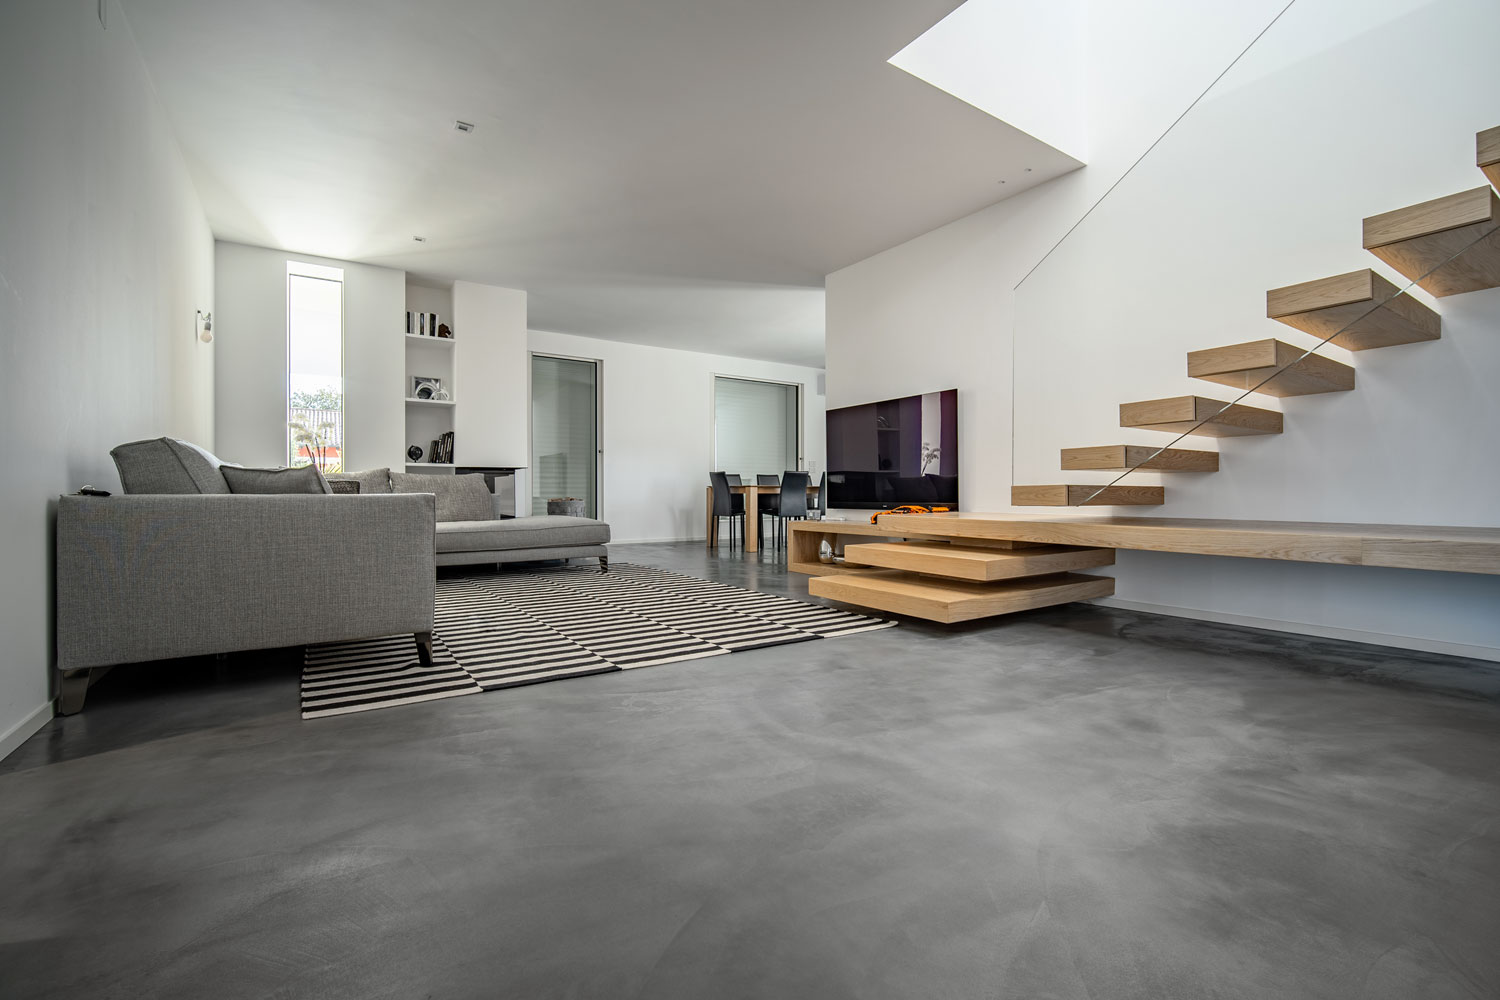 Microverlay - piso de concreto de resina de bajo espesor - apartamento privado - Studio Stocco Architetti